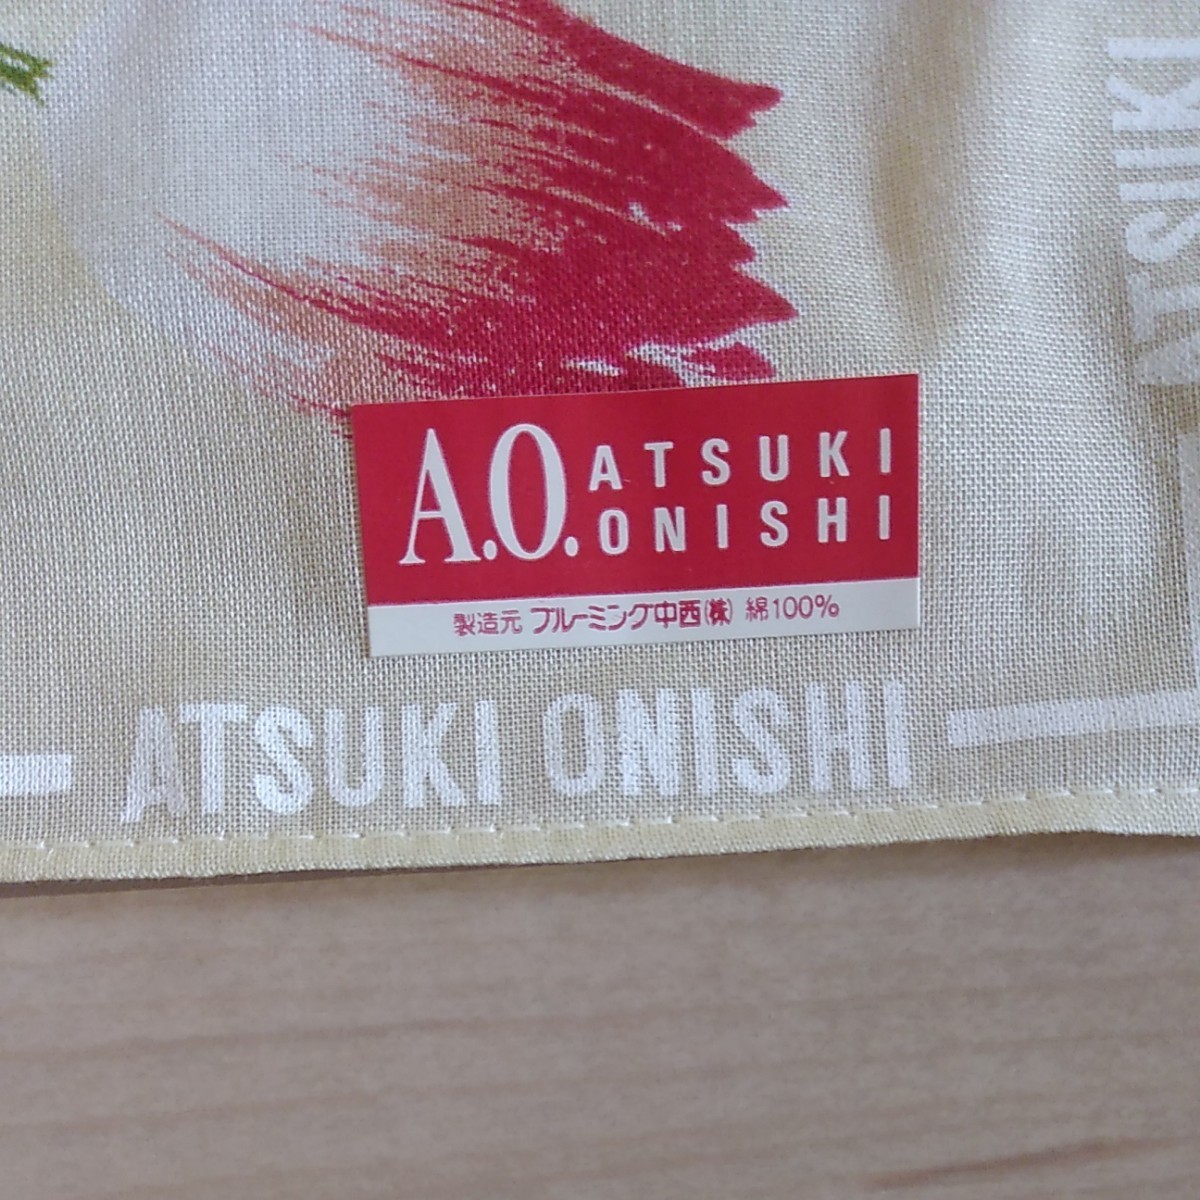 ATSUKI ONISHI  ブランドハンカチ